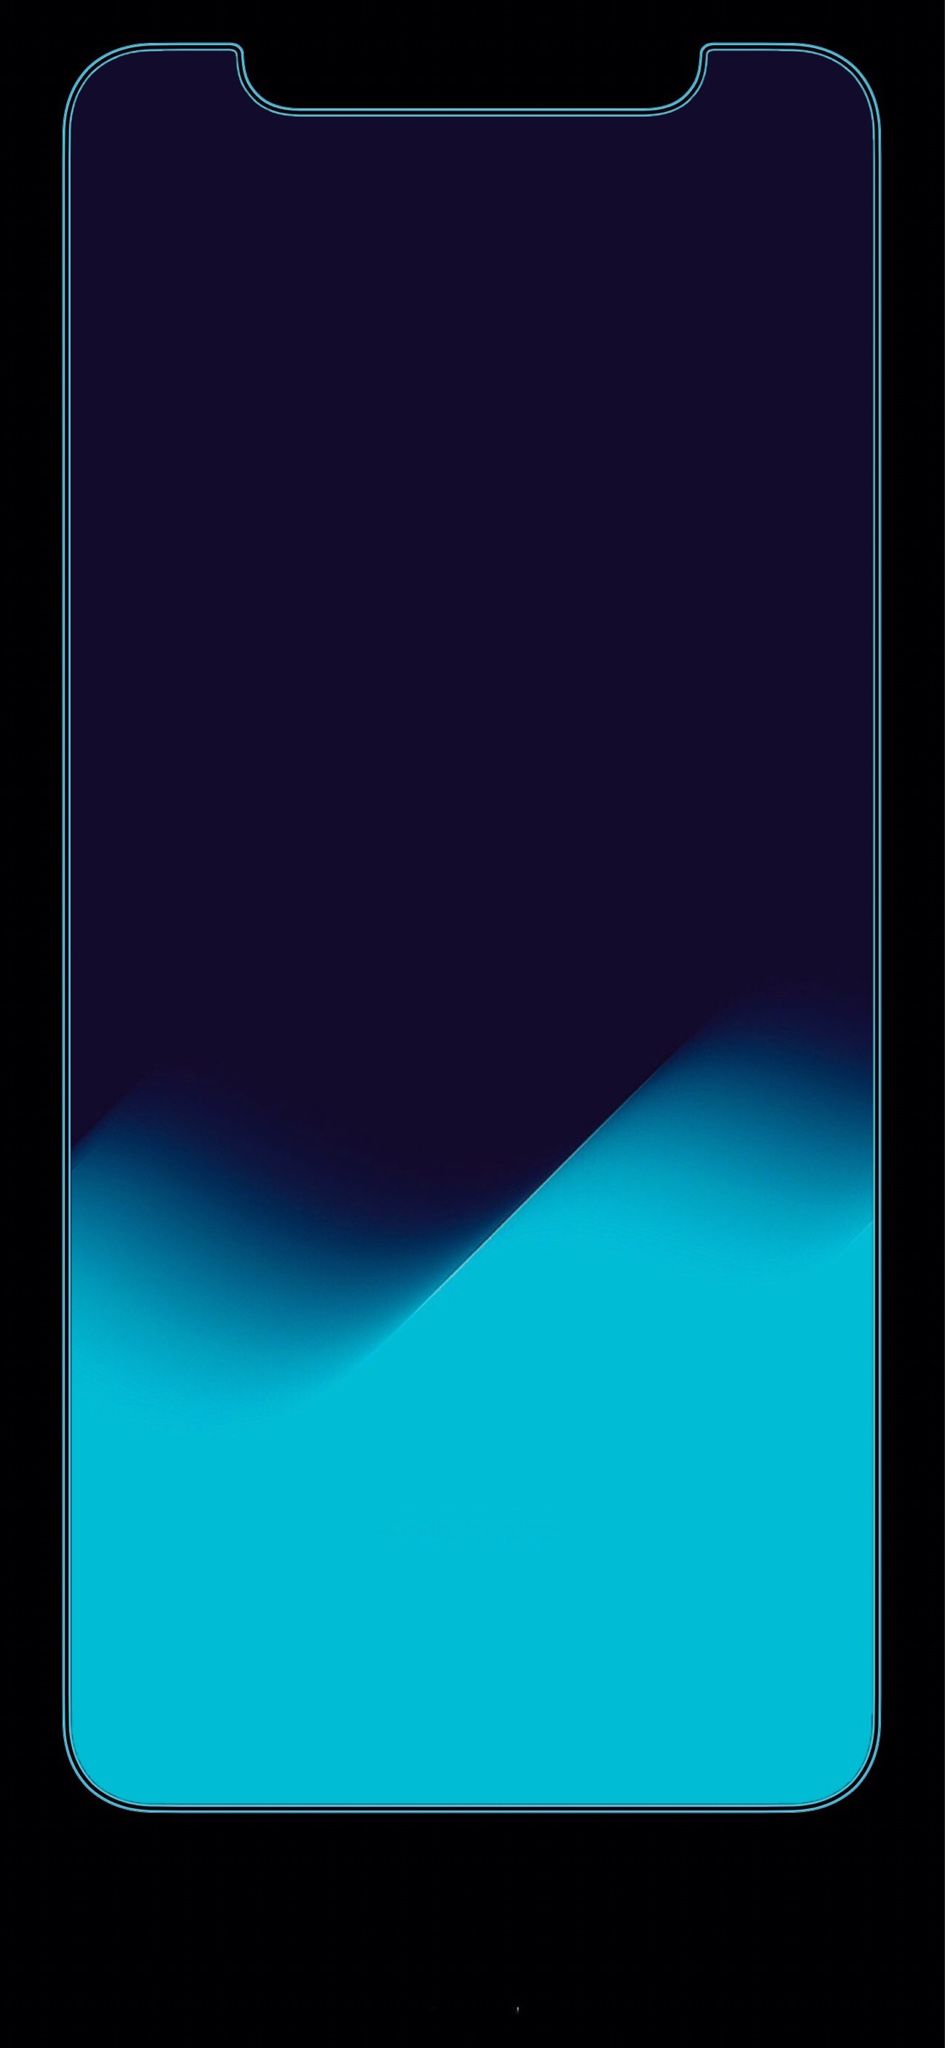 Free download iphone x Wallpaper in 2019 Apple wallpaper iphone